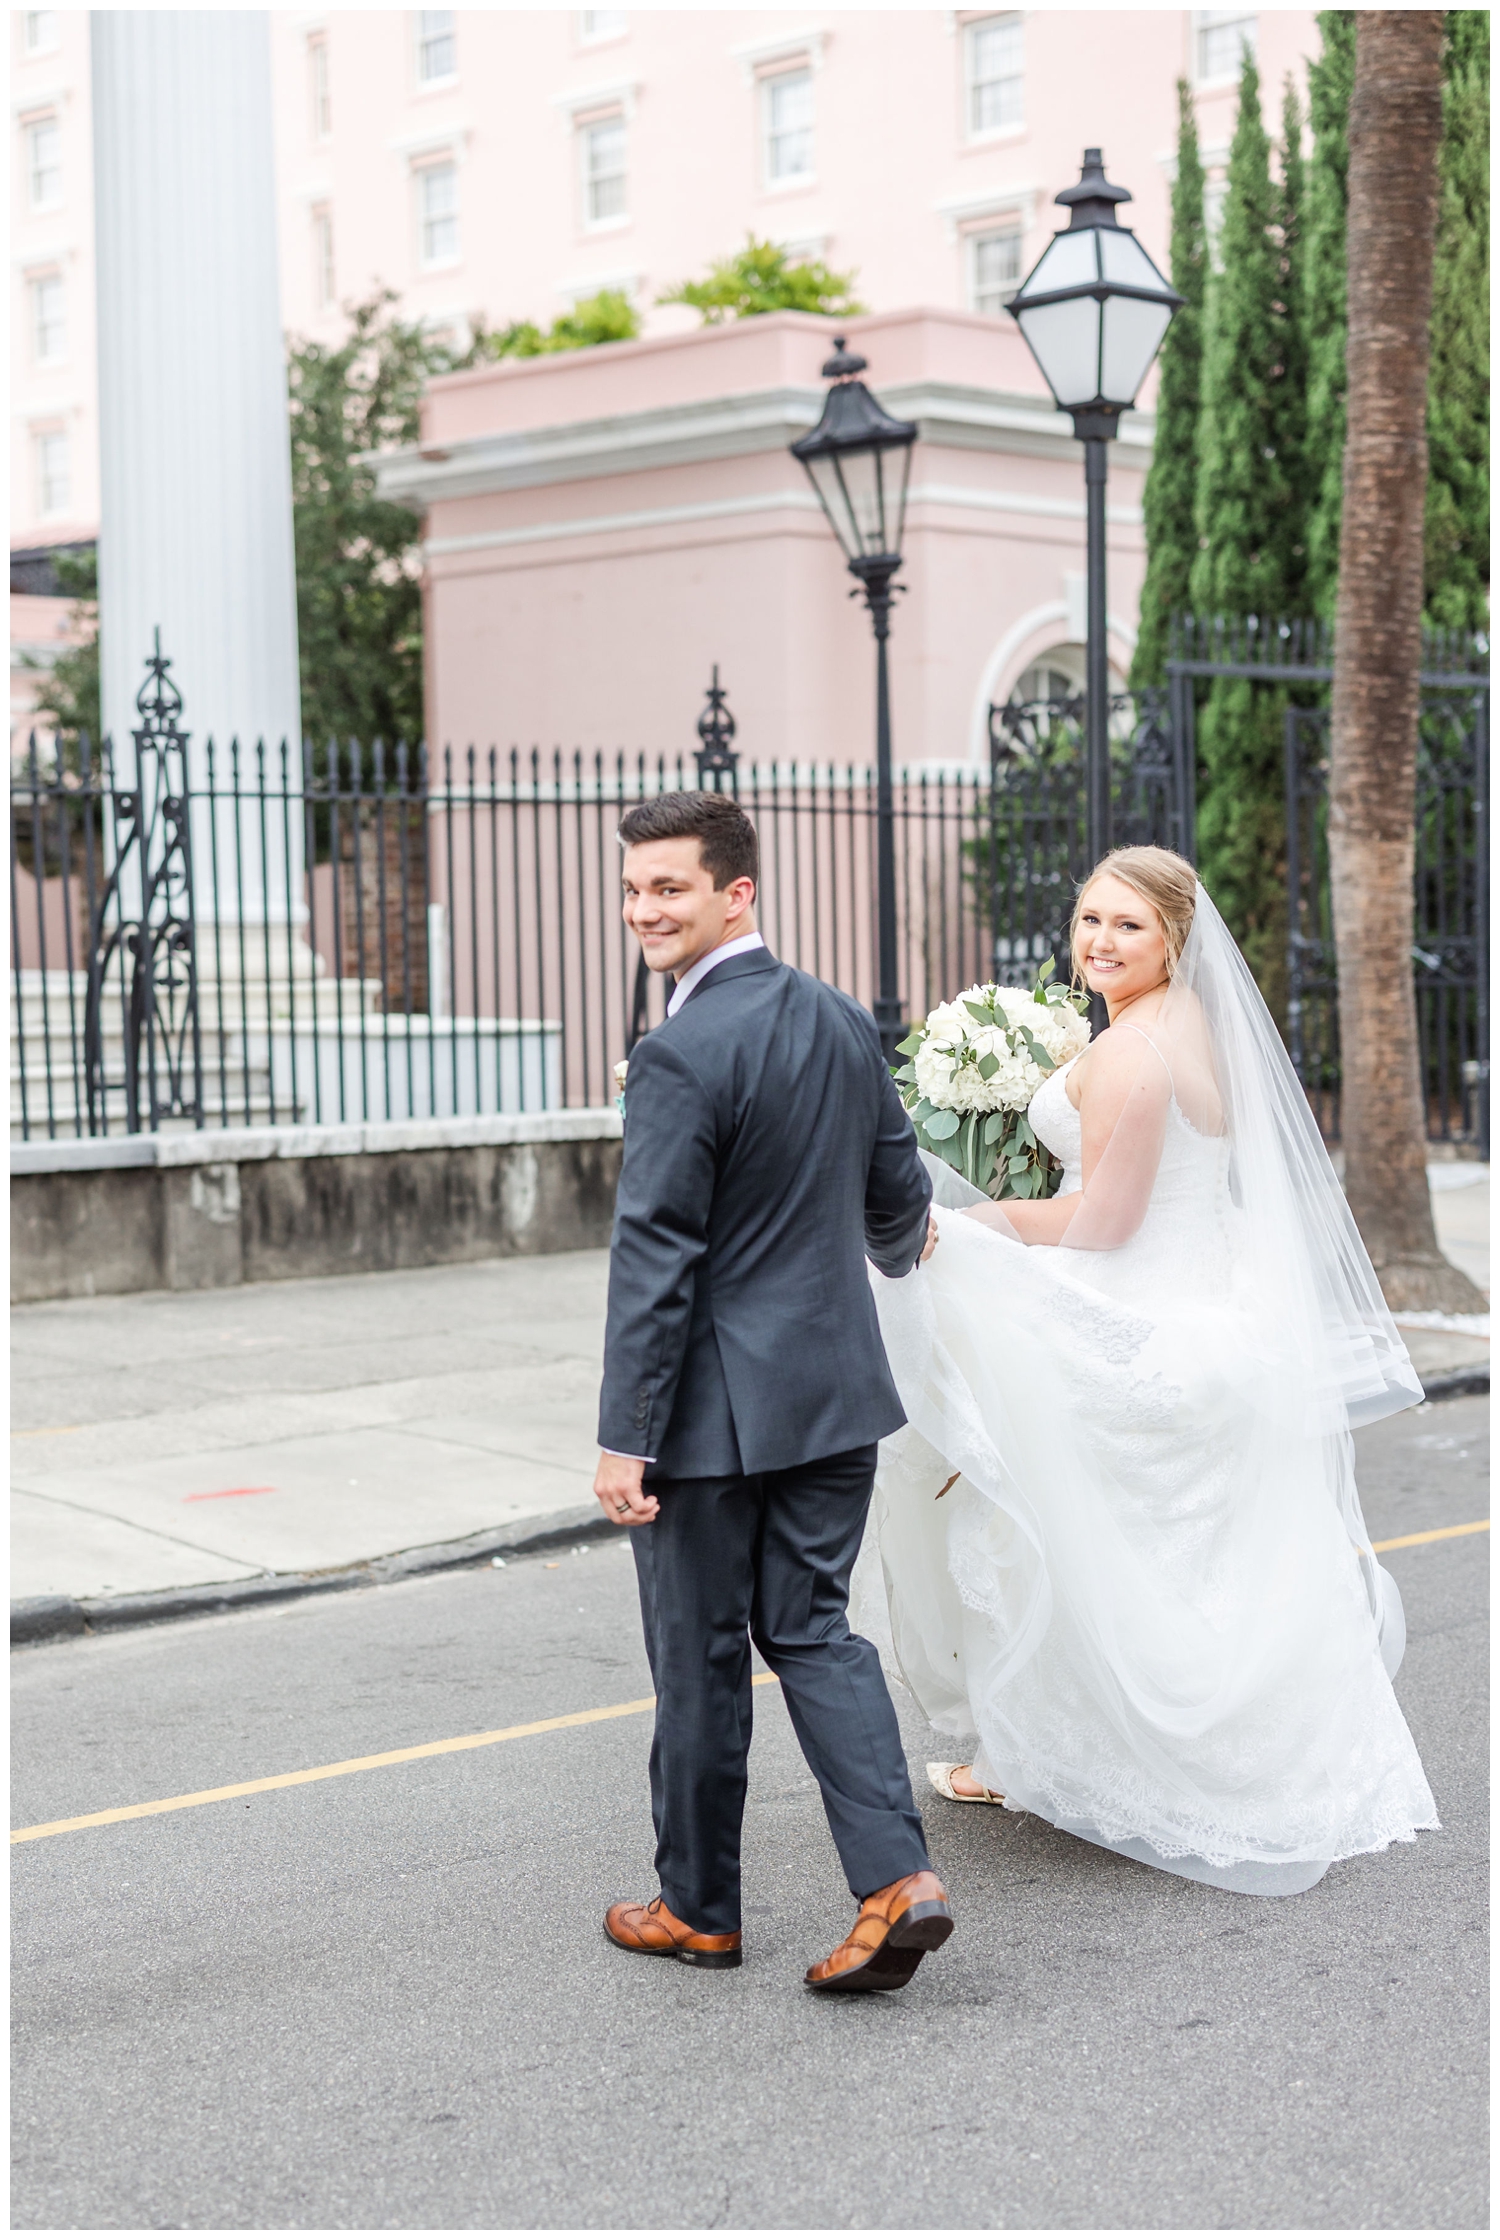 newlyweds walking in street by Charleston Merchants Hall Reception